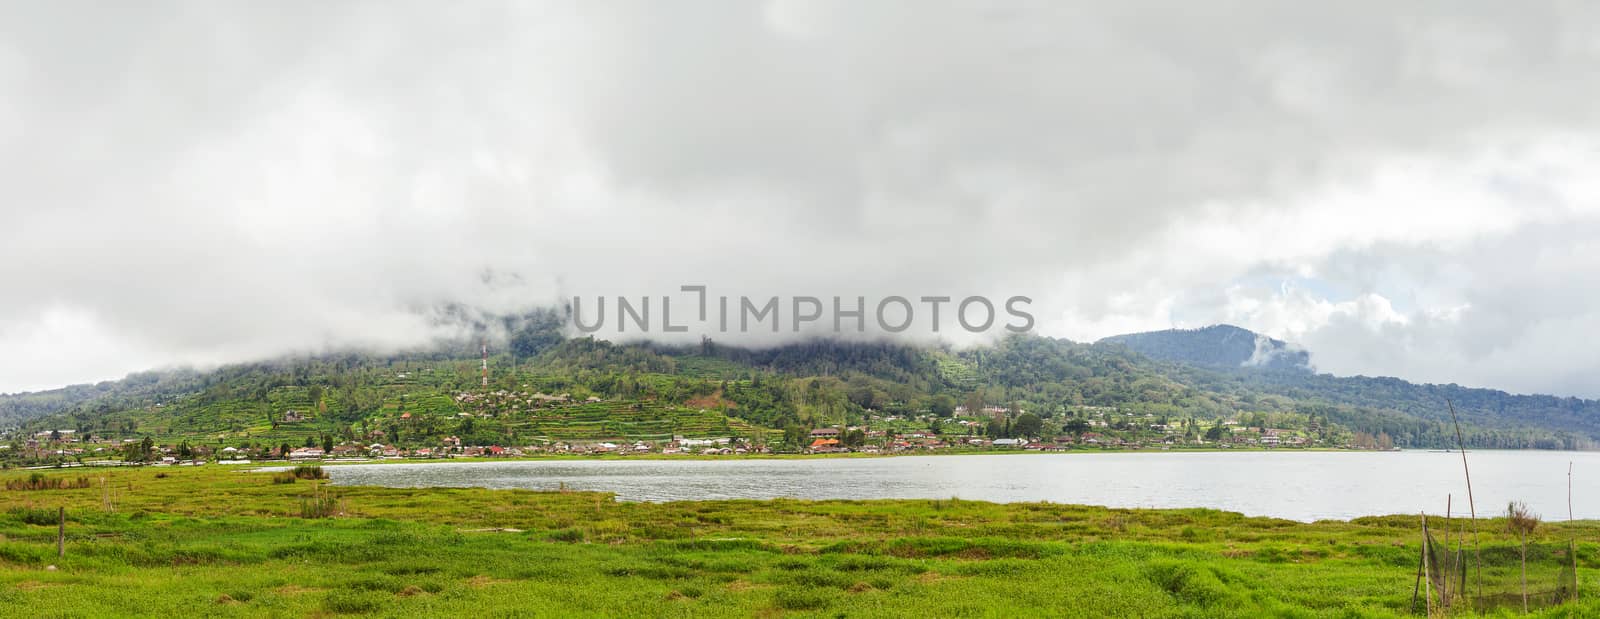 Panorama view on agricultural fields near Batur volcano, Kintamani. Winter rainy and cloudy season. Bali, Indonesia.